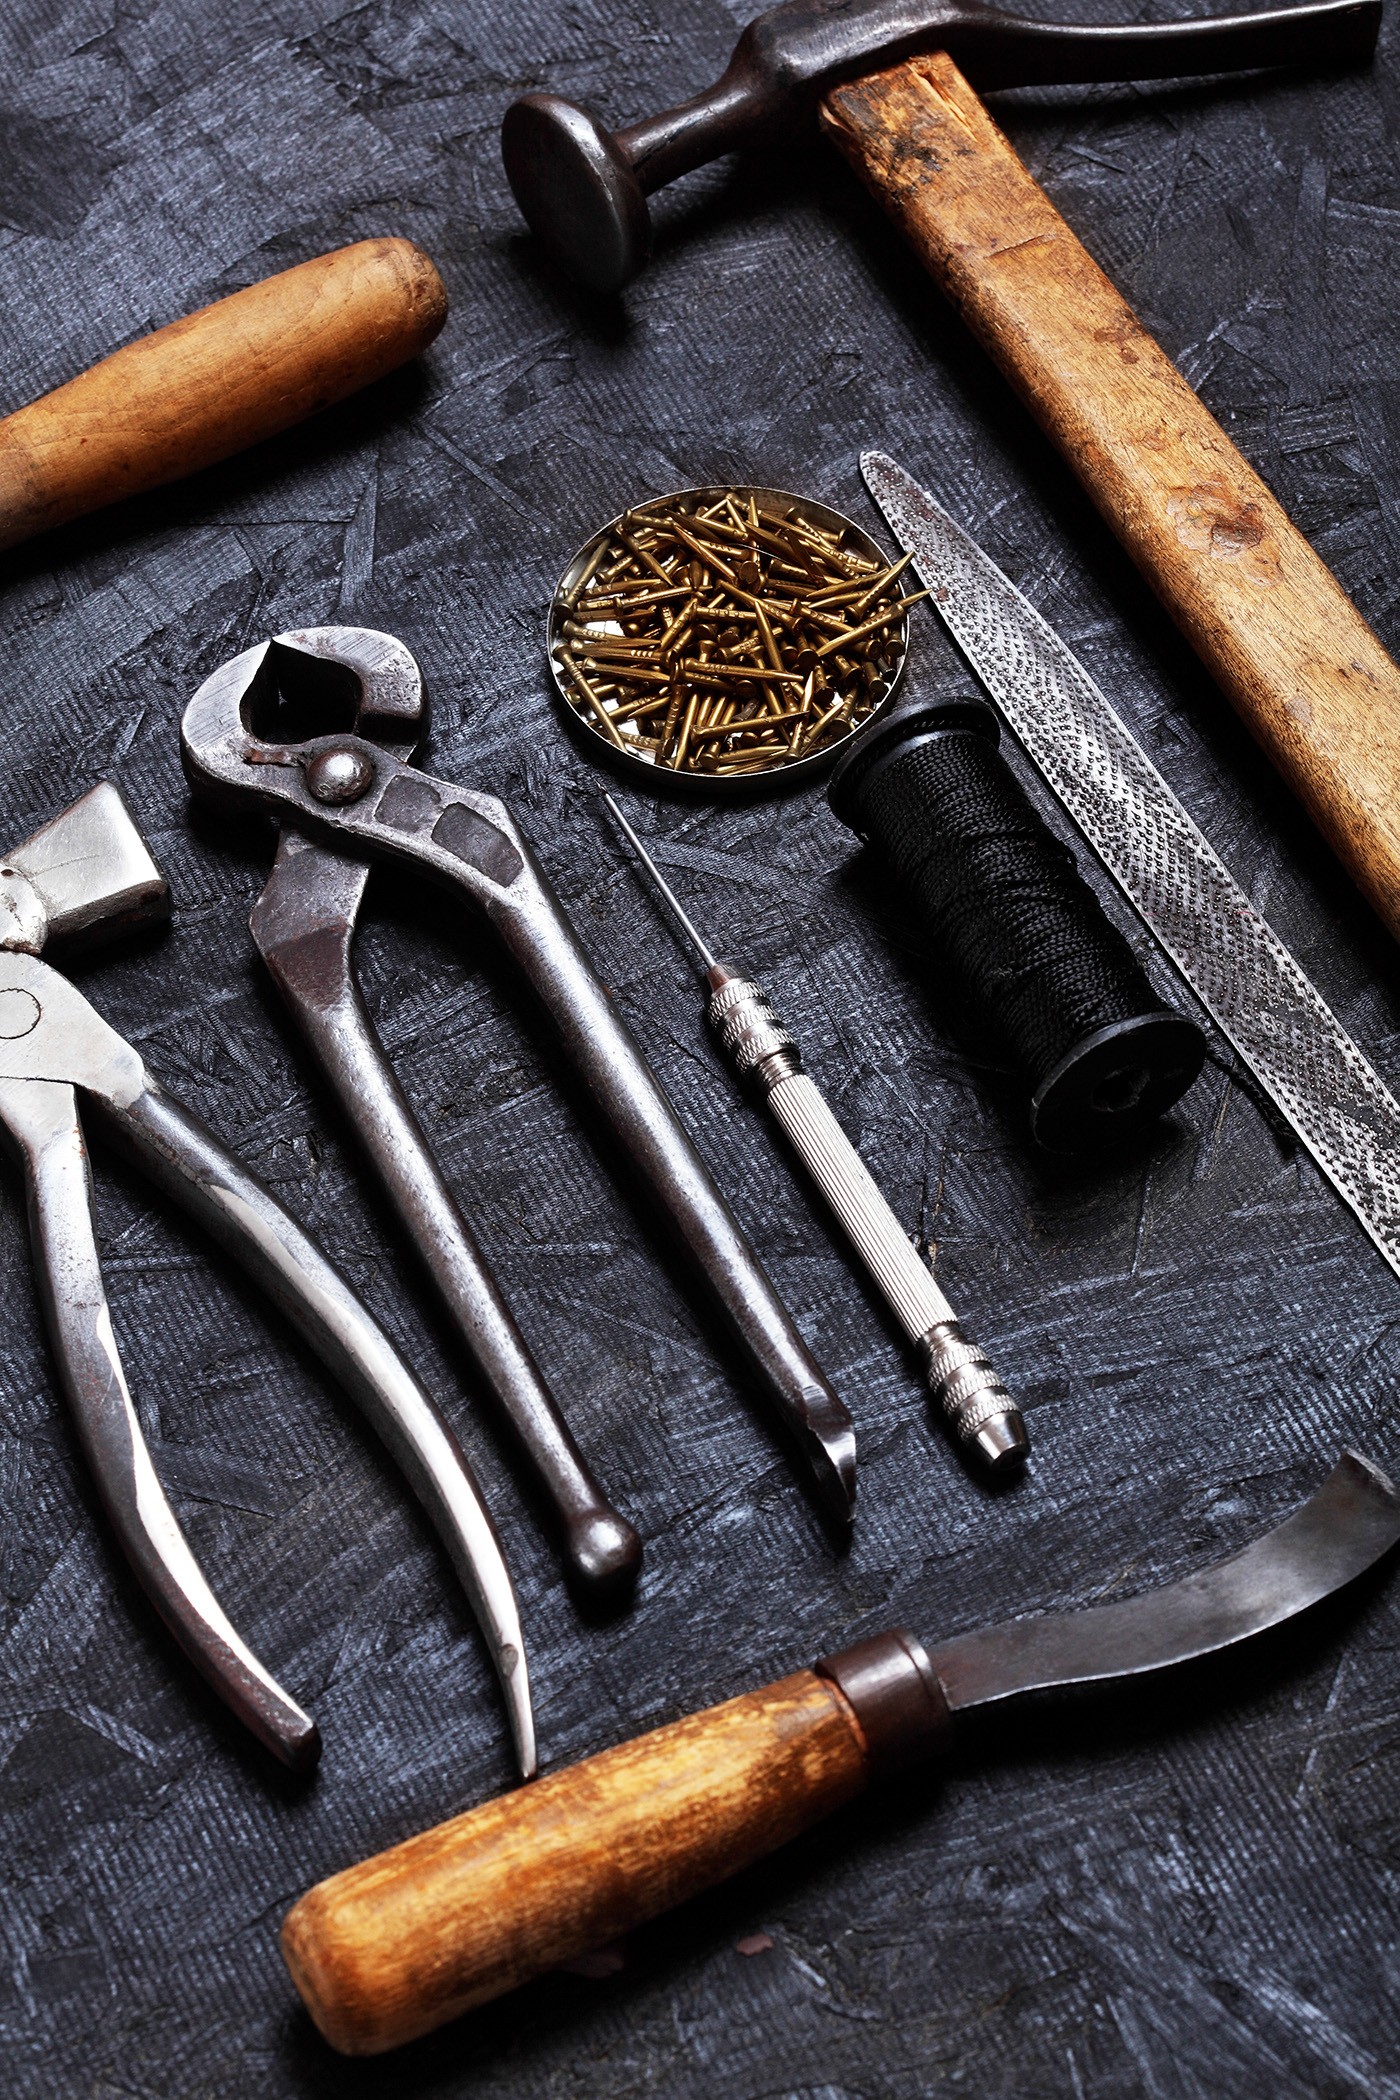 tools Cobbler hammer knife shoemaking nails